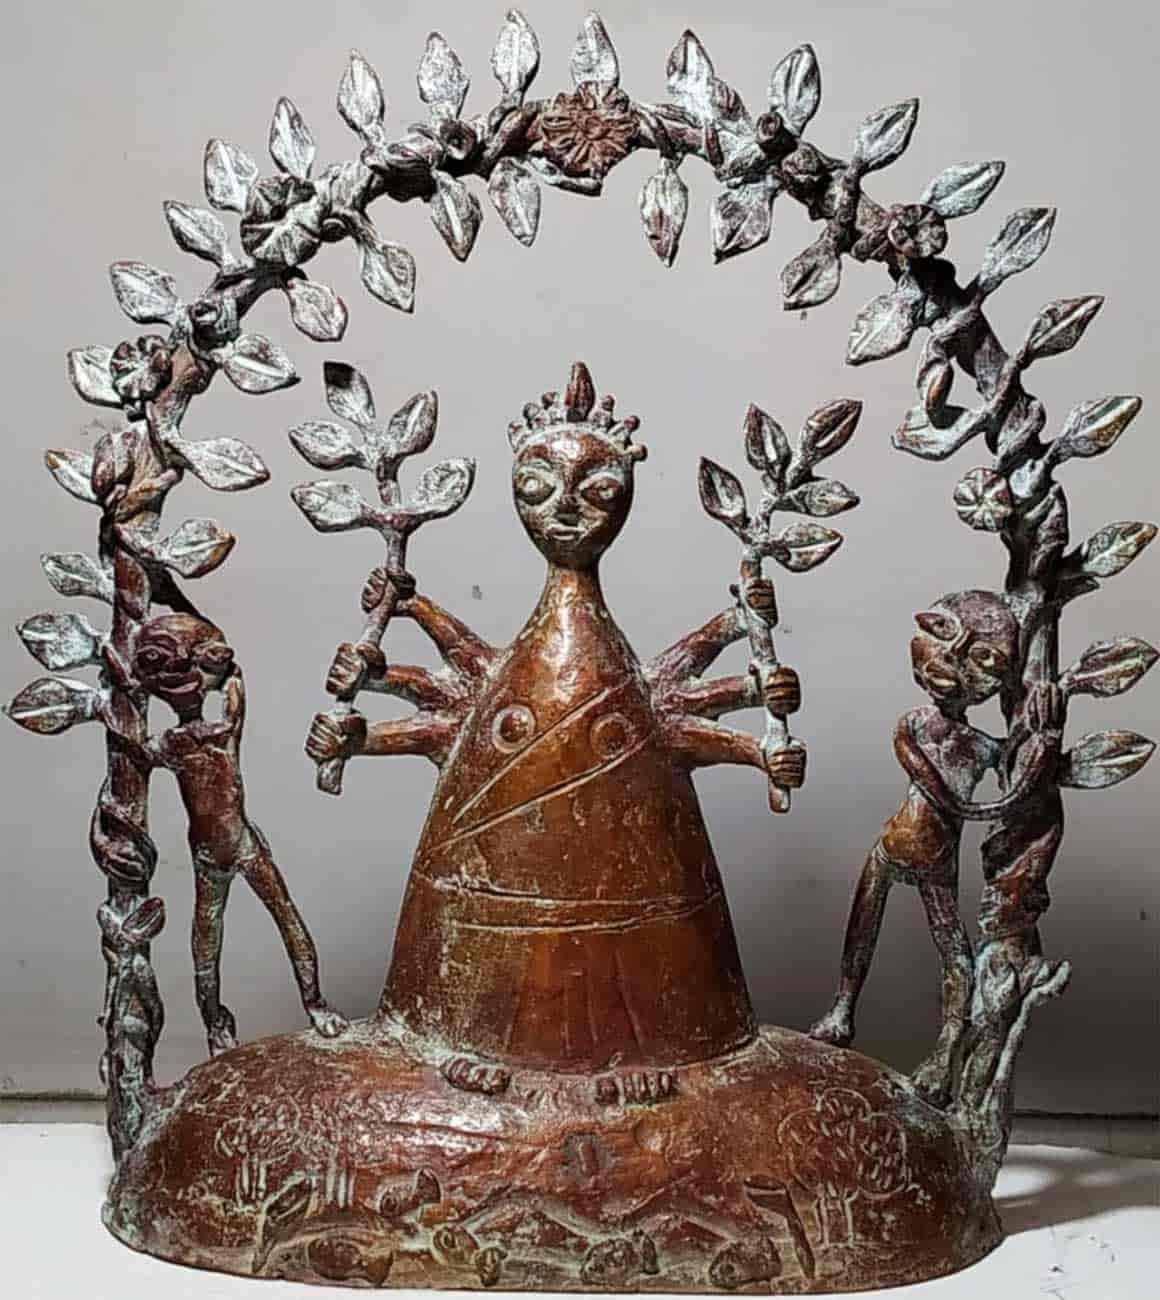 Subrata Biswas Figurative Sculpture - Woman-Mother Nature, Two Children, Green Patina Bronze Sculpture,  "In Stock"